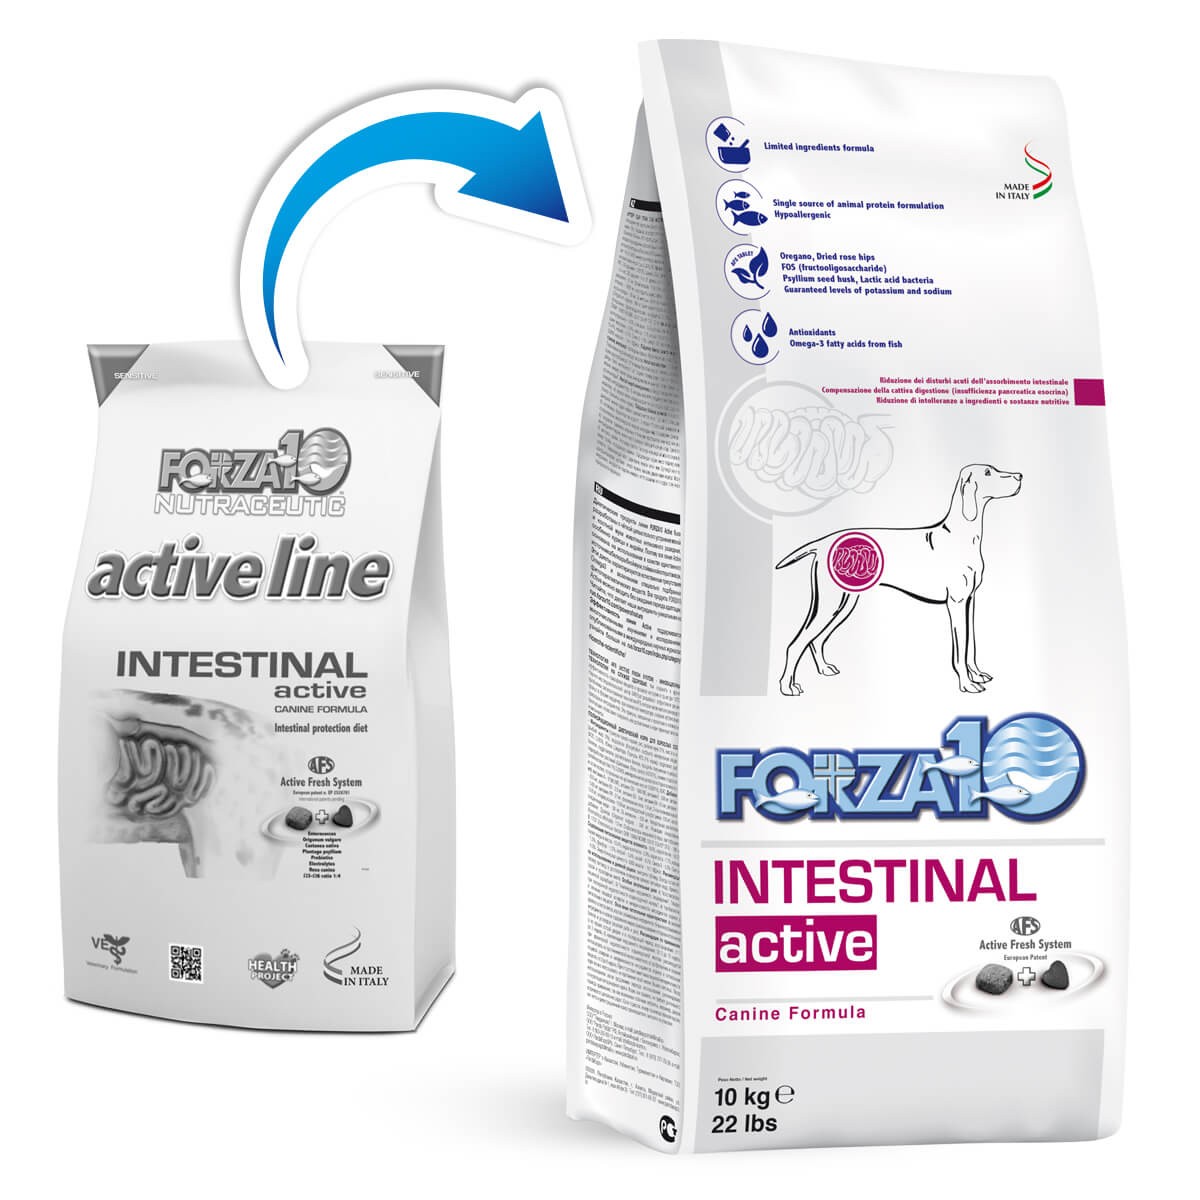 Сухие корма для собак интестинал. Forza 10 корм для собак intestinal Active. Forza10 Active line intestinal. Forza10 intestinal Active для собак. Forza10 Dermo Active (10 кг).